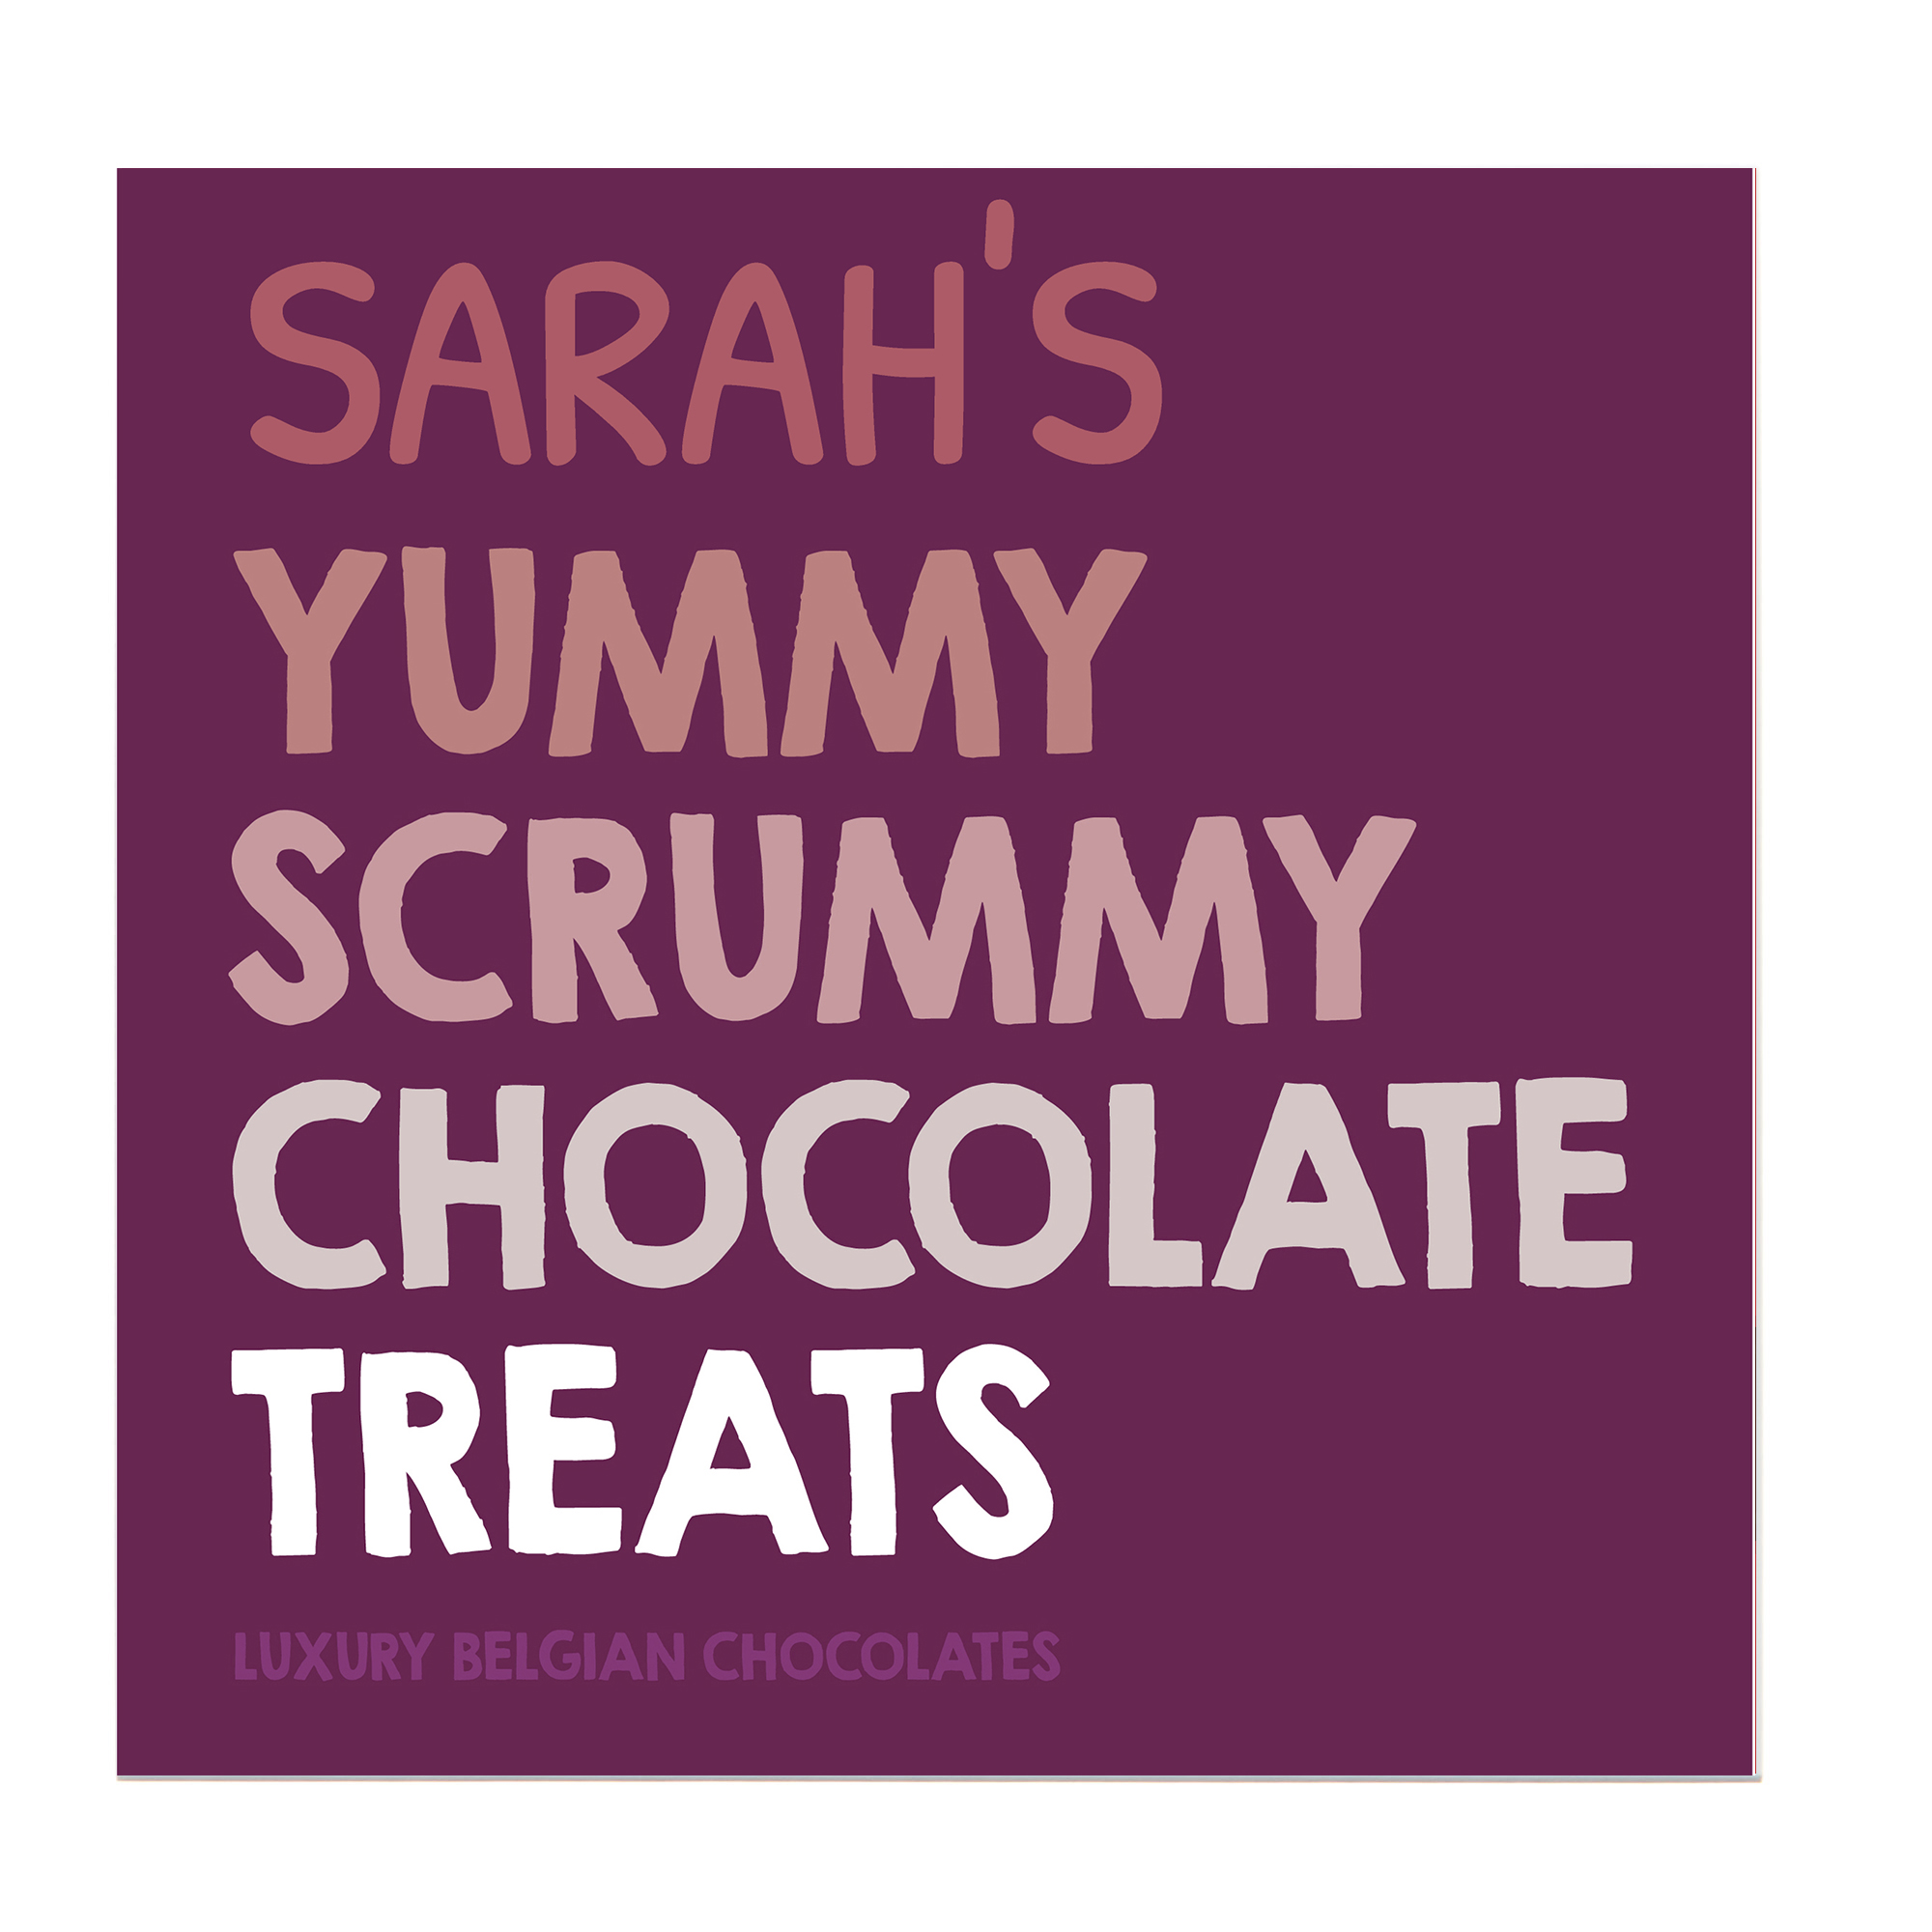 Personalised Belgian Chocolates - Yummy Scrummy